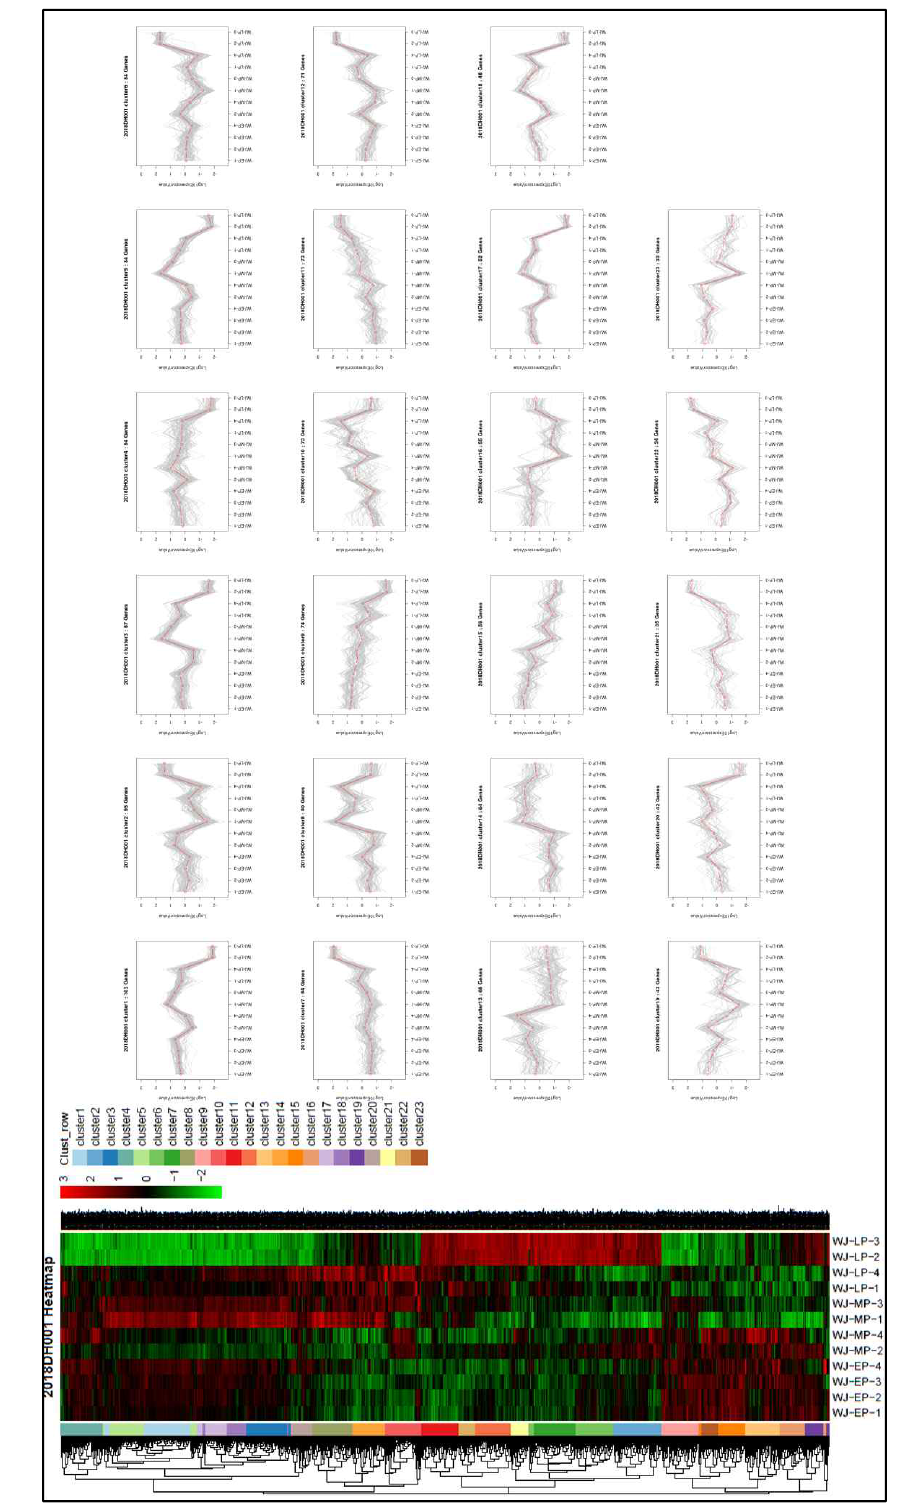 Gene module의 heat-map과 trend-line (논문 준비 중)